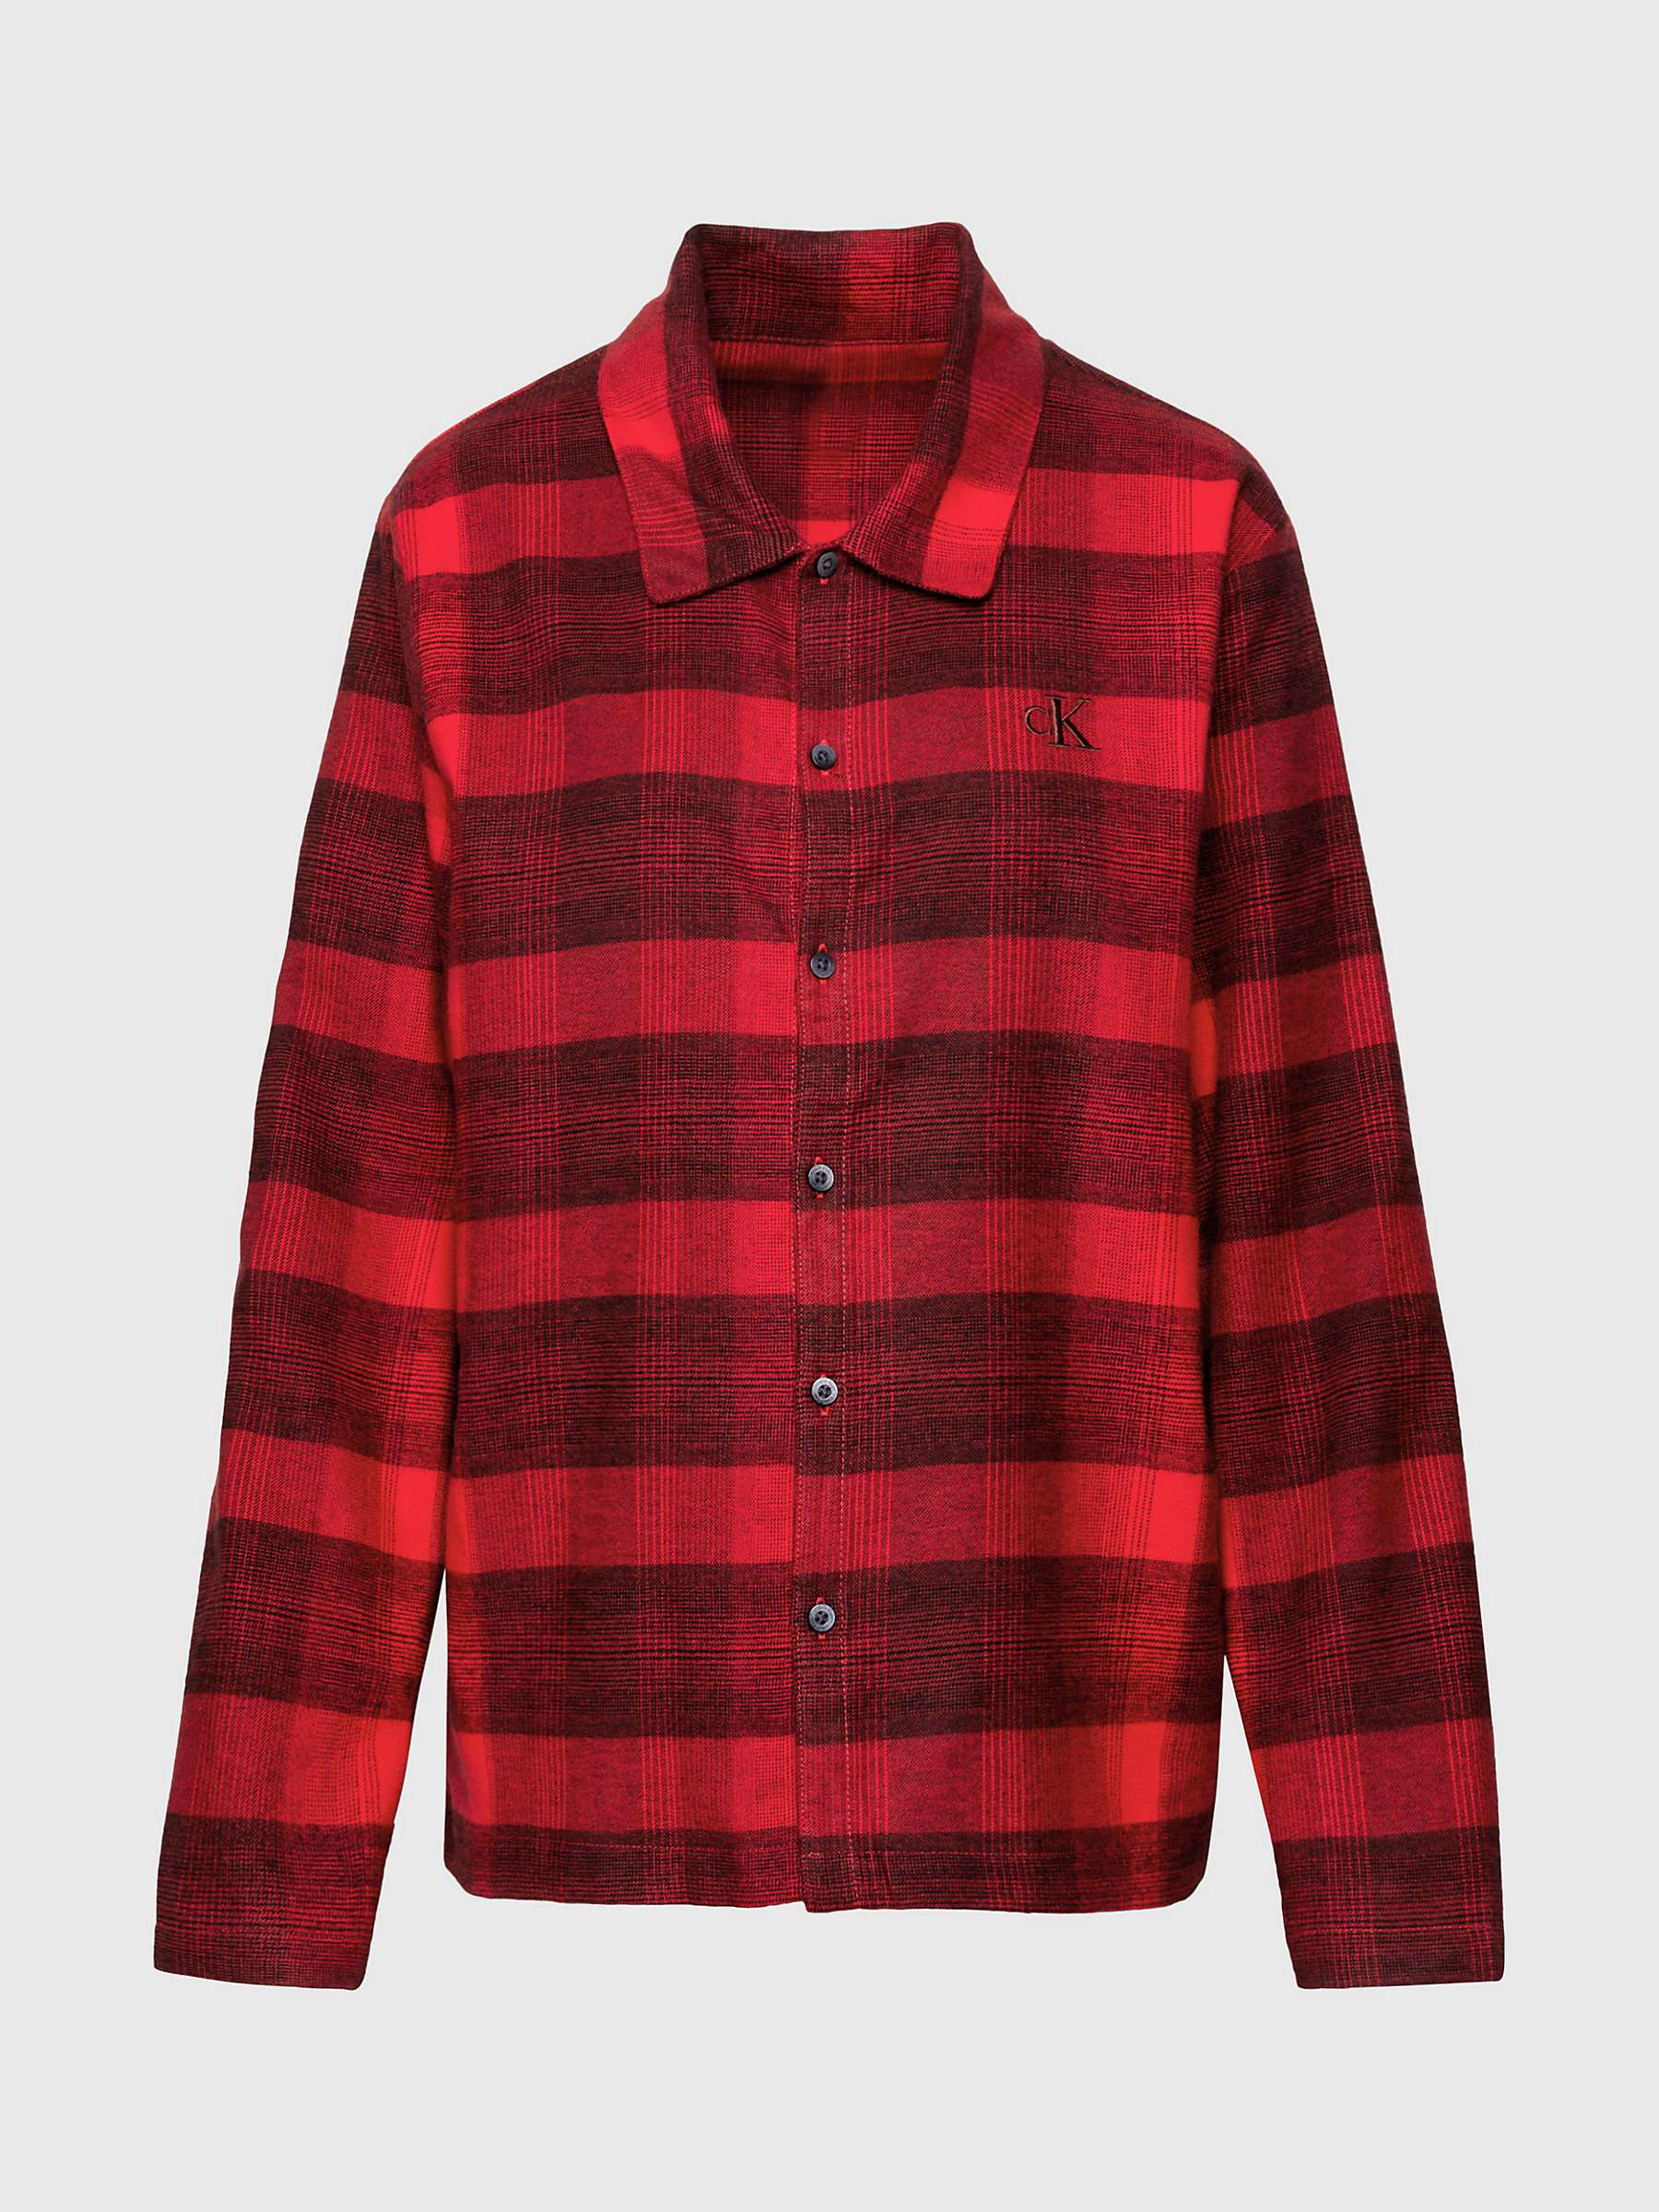 Buy Calvin Klein Check Flannel Pyjama Top, Red/Black Online at johnlewis.com